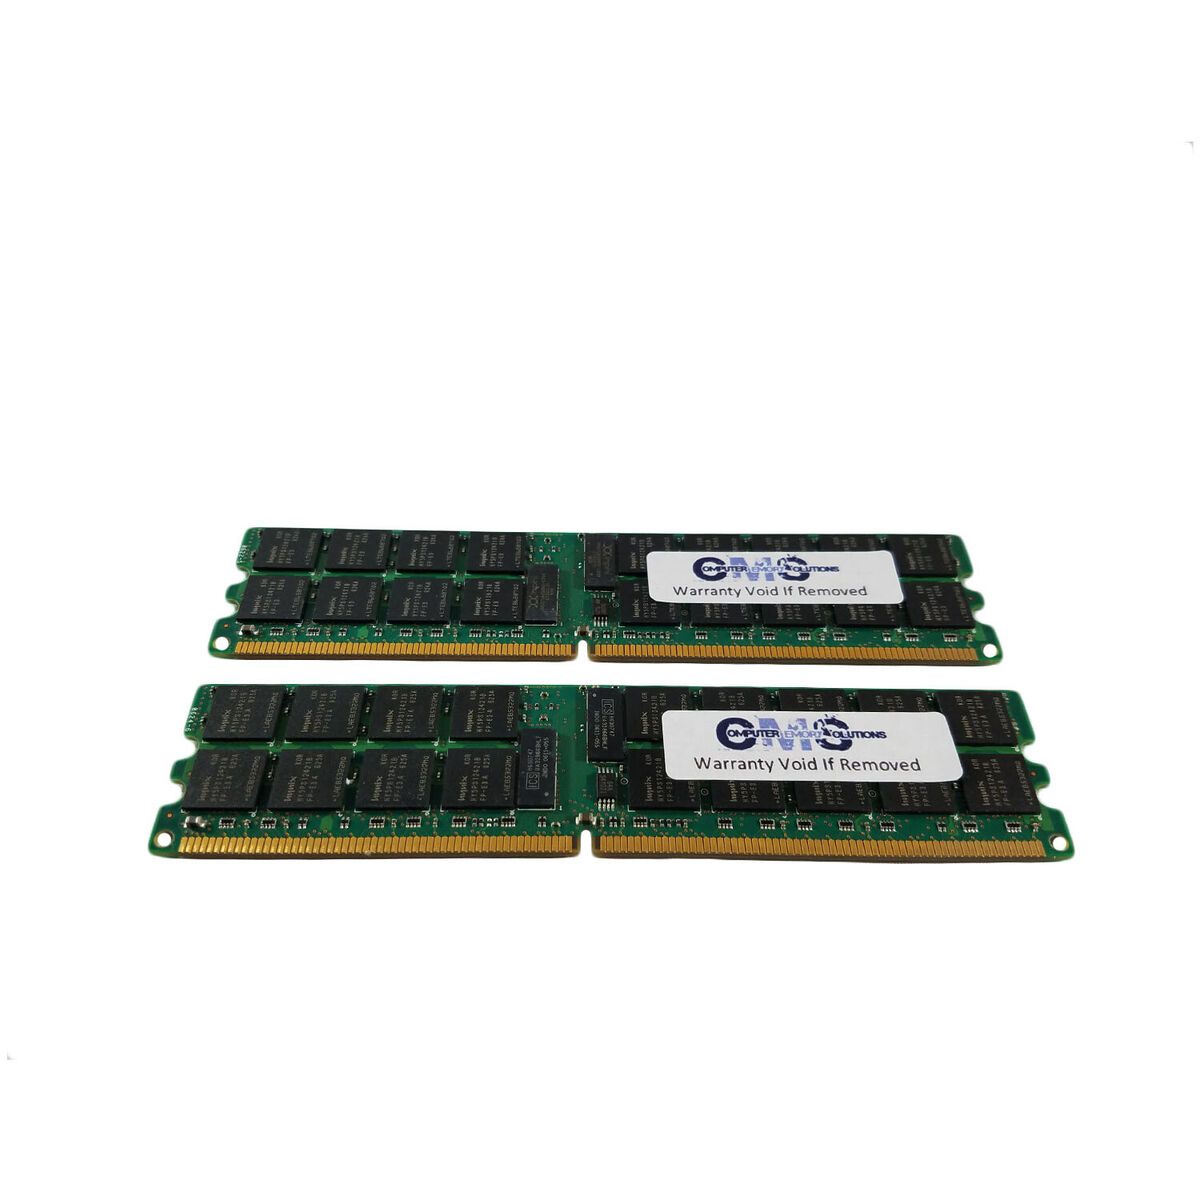 BL465c - ProLiant - 2 GB RAM